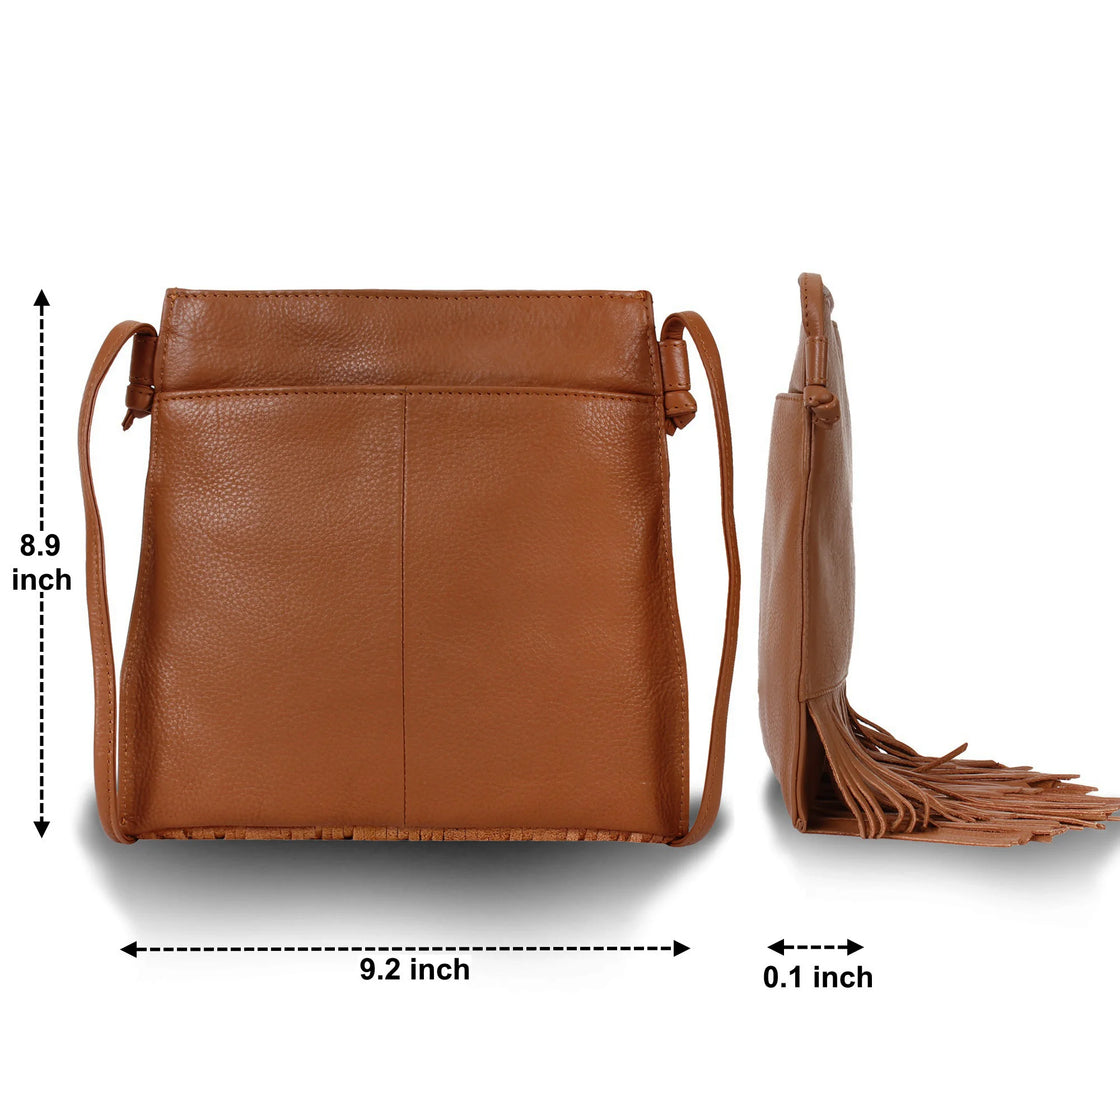 Bloomingdale's Tote Bag Review • Little Brown Bag• Medium Brown Bag -  YouTube